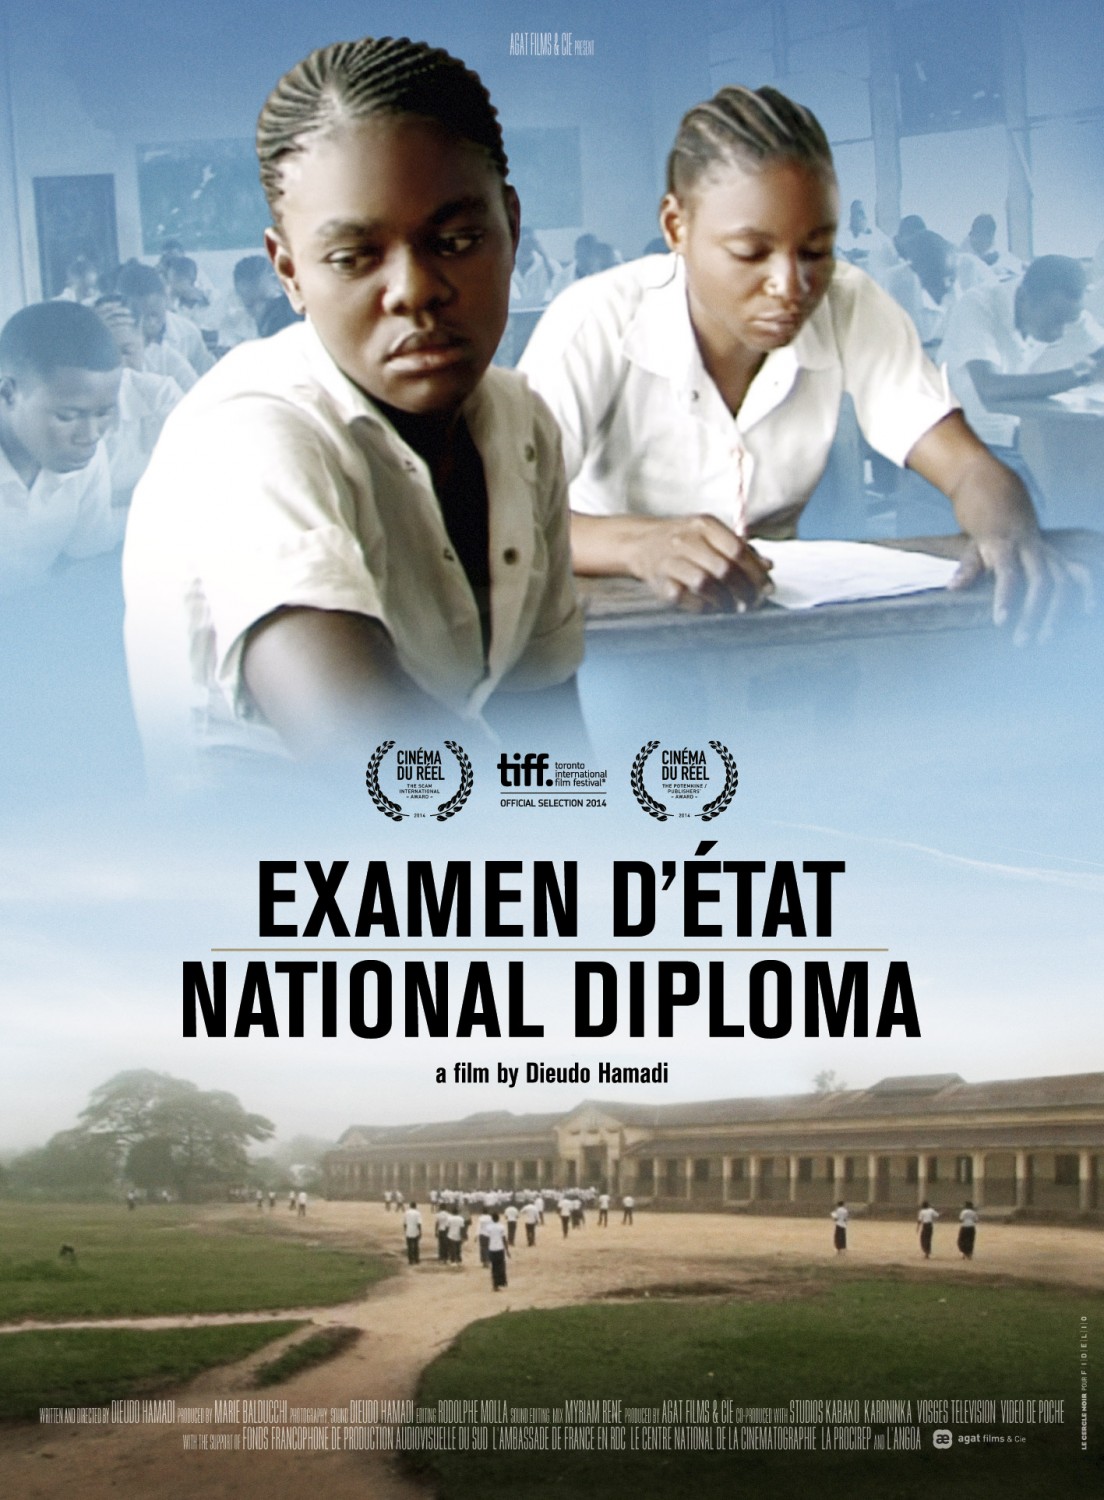 Extra Large Movie Poster Image for Examen d'état 